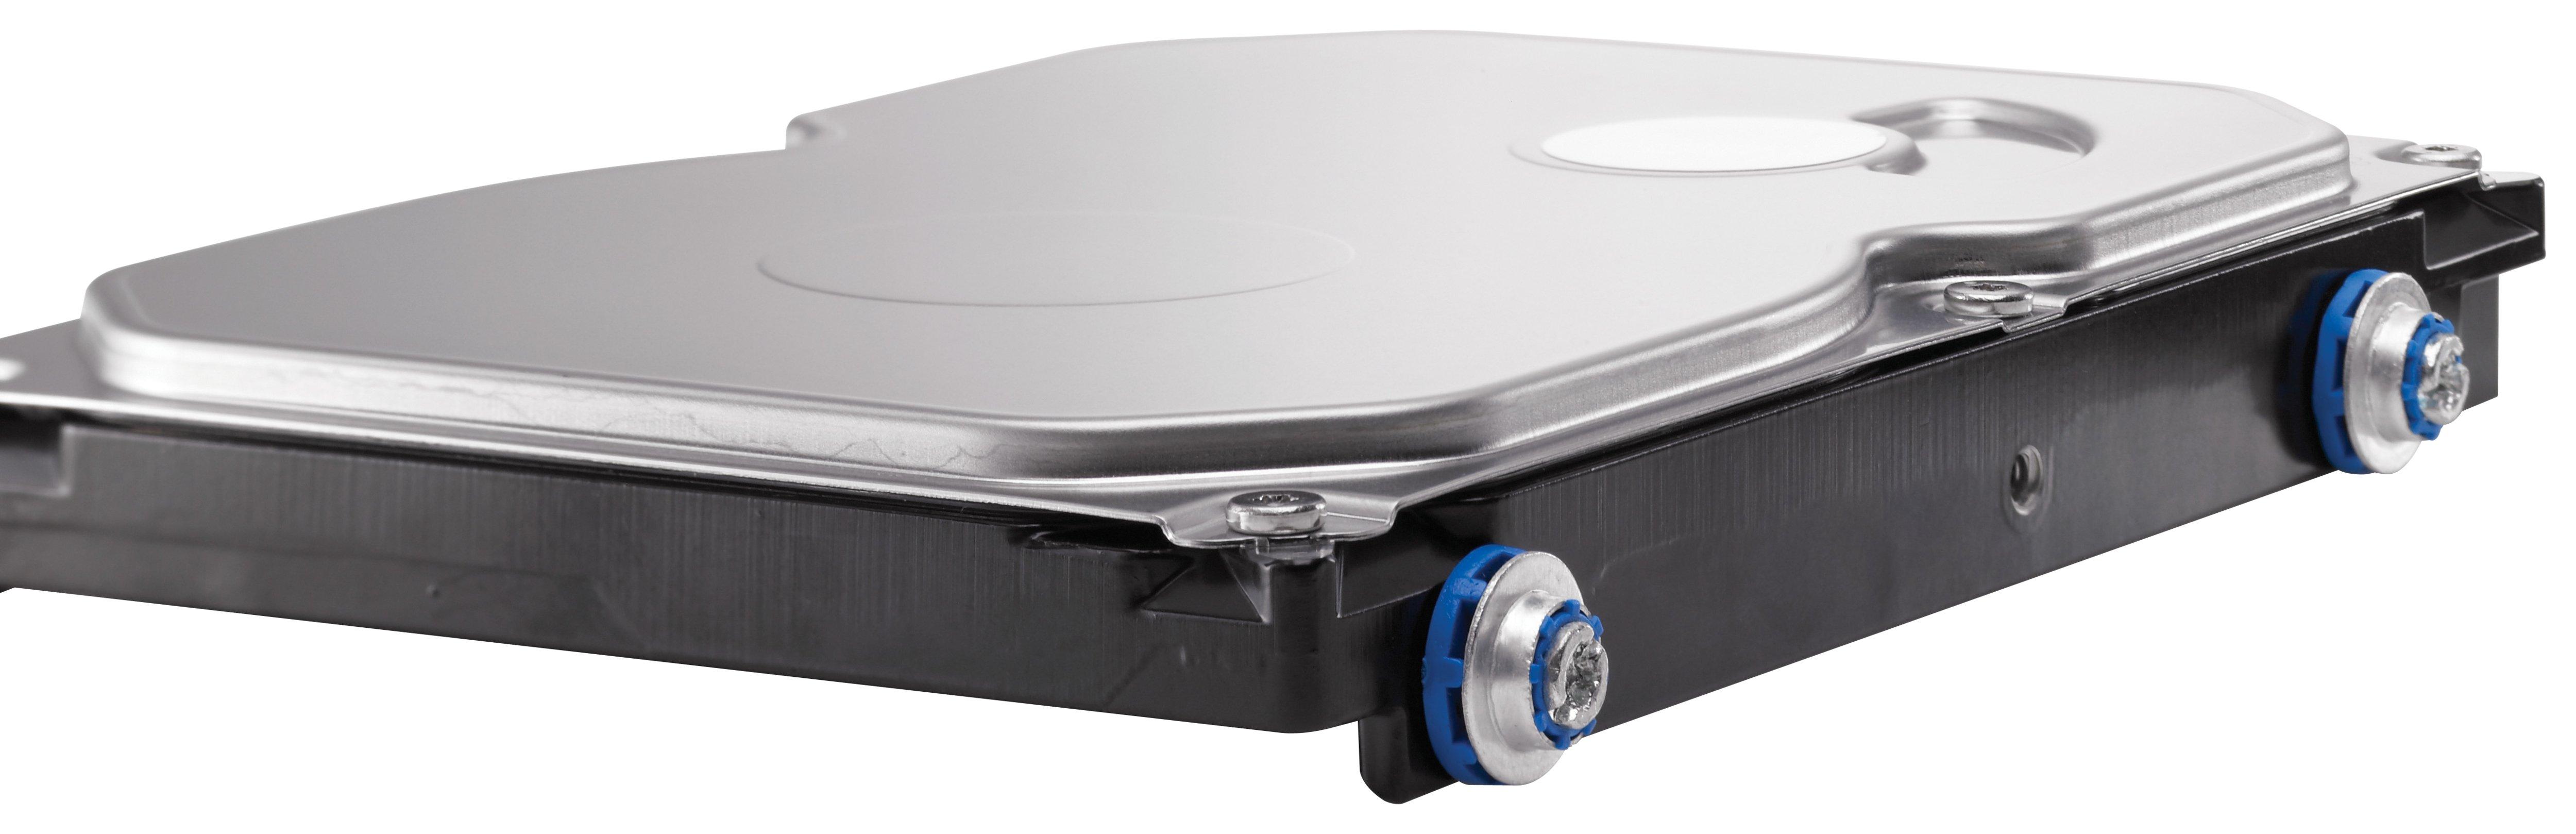 Hewlett-Packard  Unità disco rigido SATA (NCQ/Smart IV) da 1 TB 7200 rpm 6 Gbp/s 